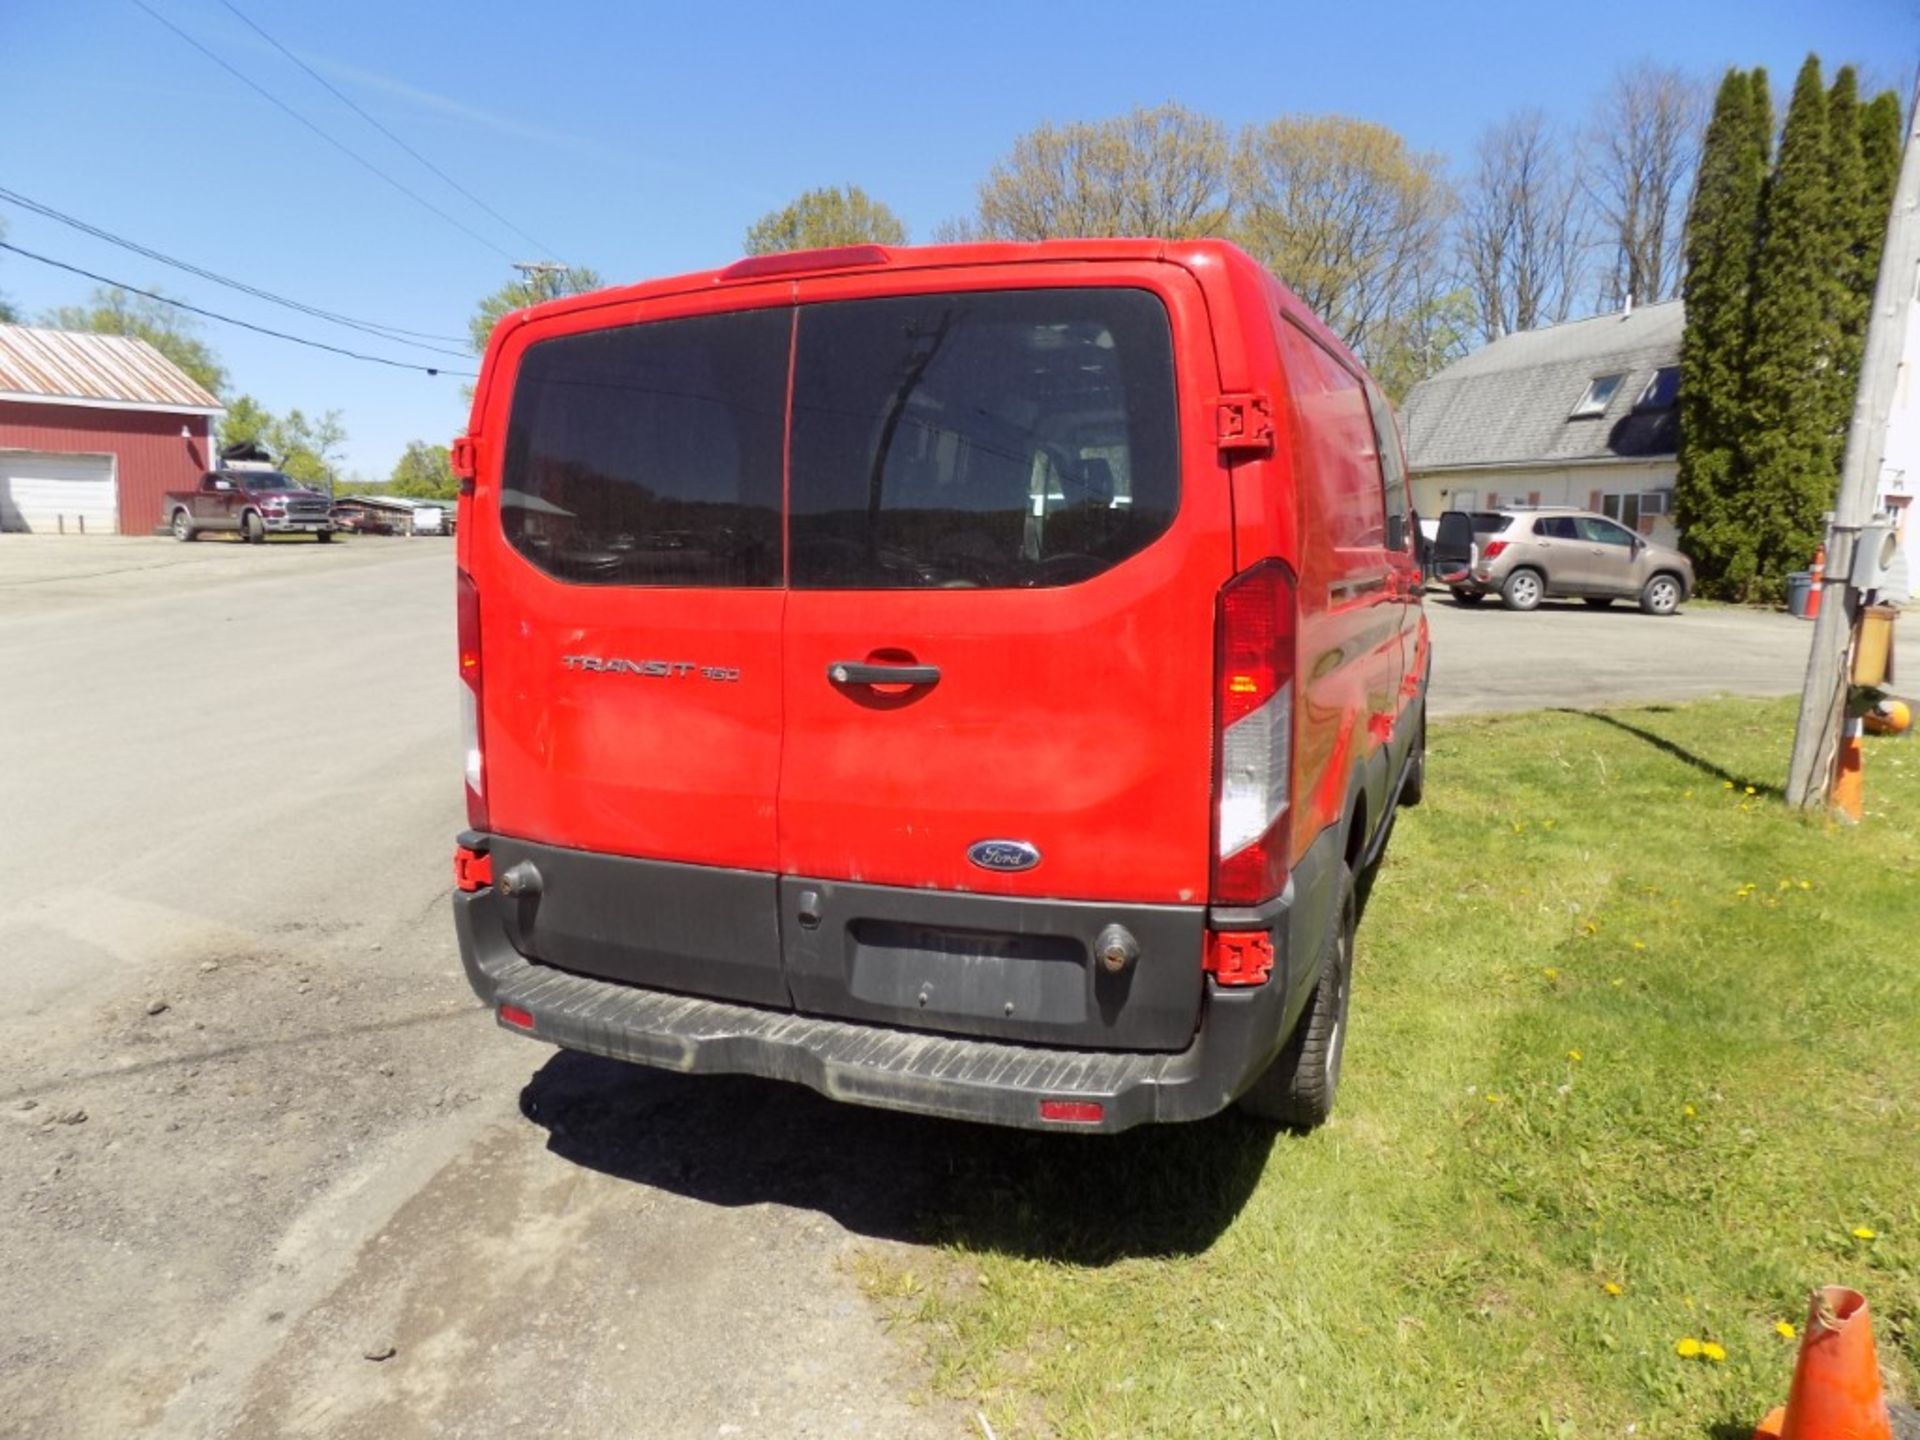 2018 Ford T350 Cargo Van, Base, Red, 257,179 Mi, Vin# 1FTBW2ZM5JKA26379 - OPEN TO ALL BUYERS - Image 3 of 4